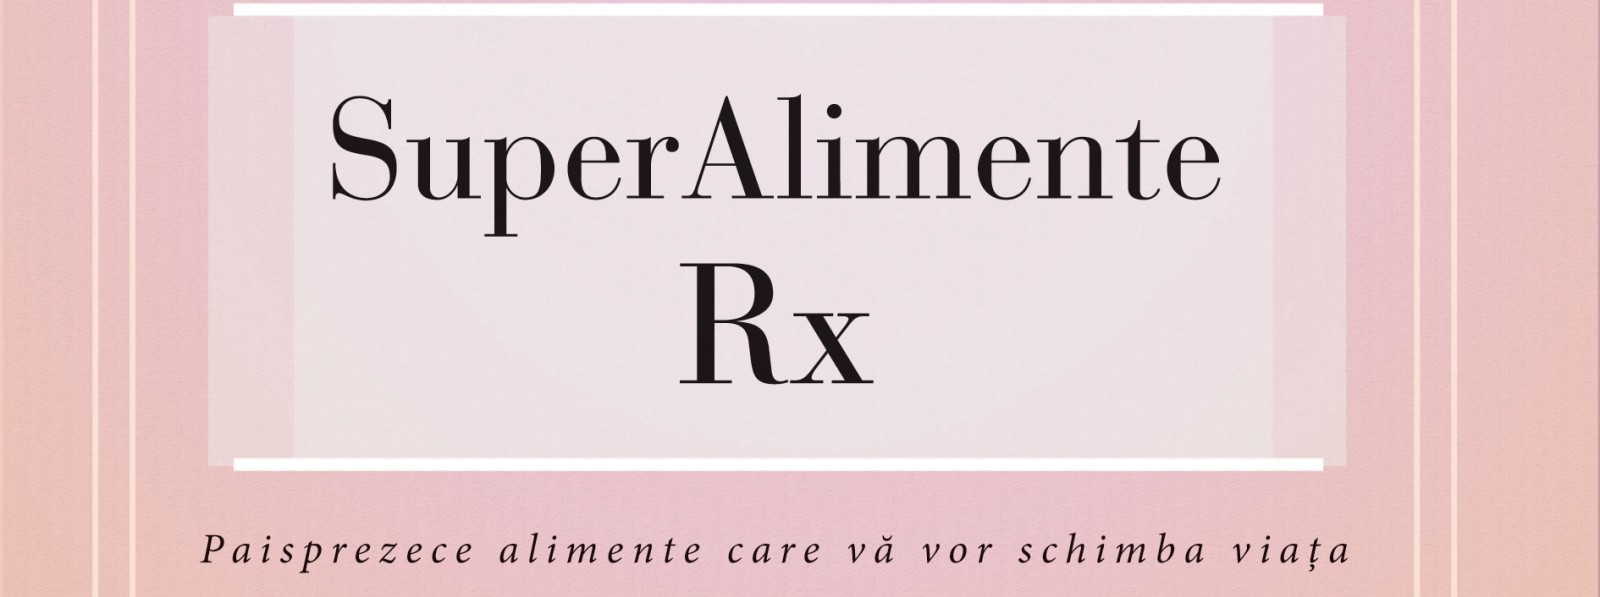 SuperAlimente RX